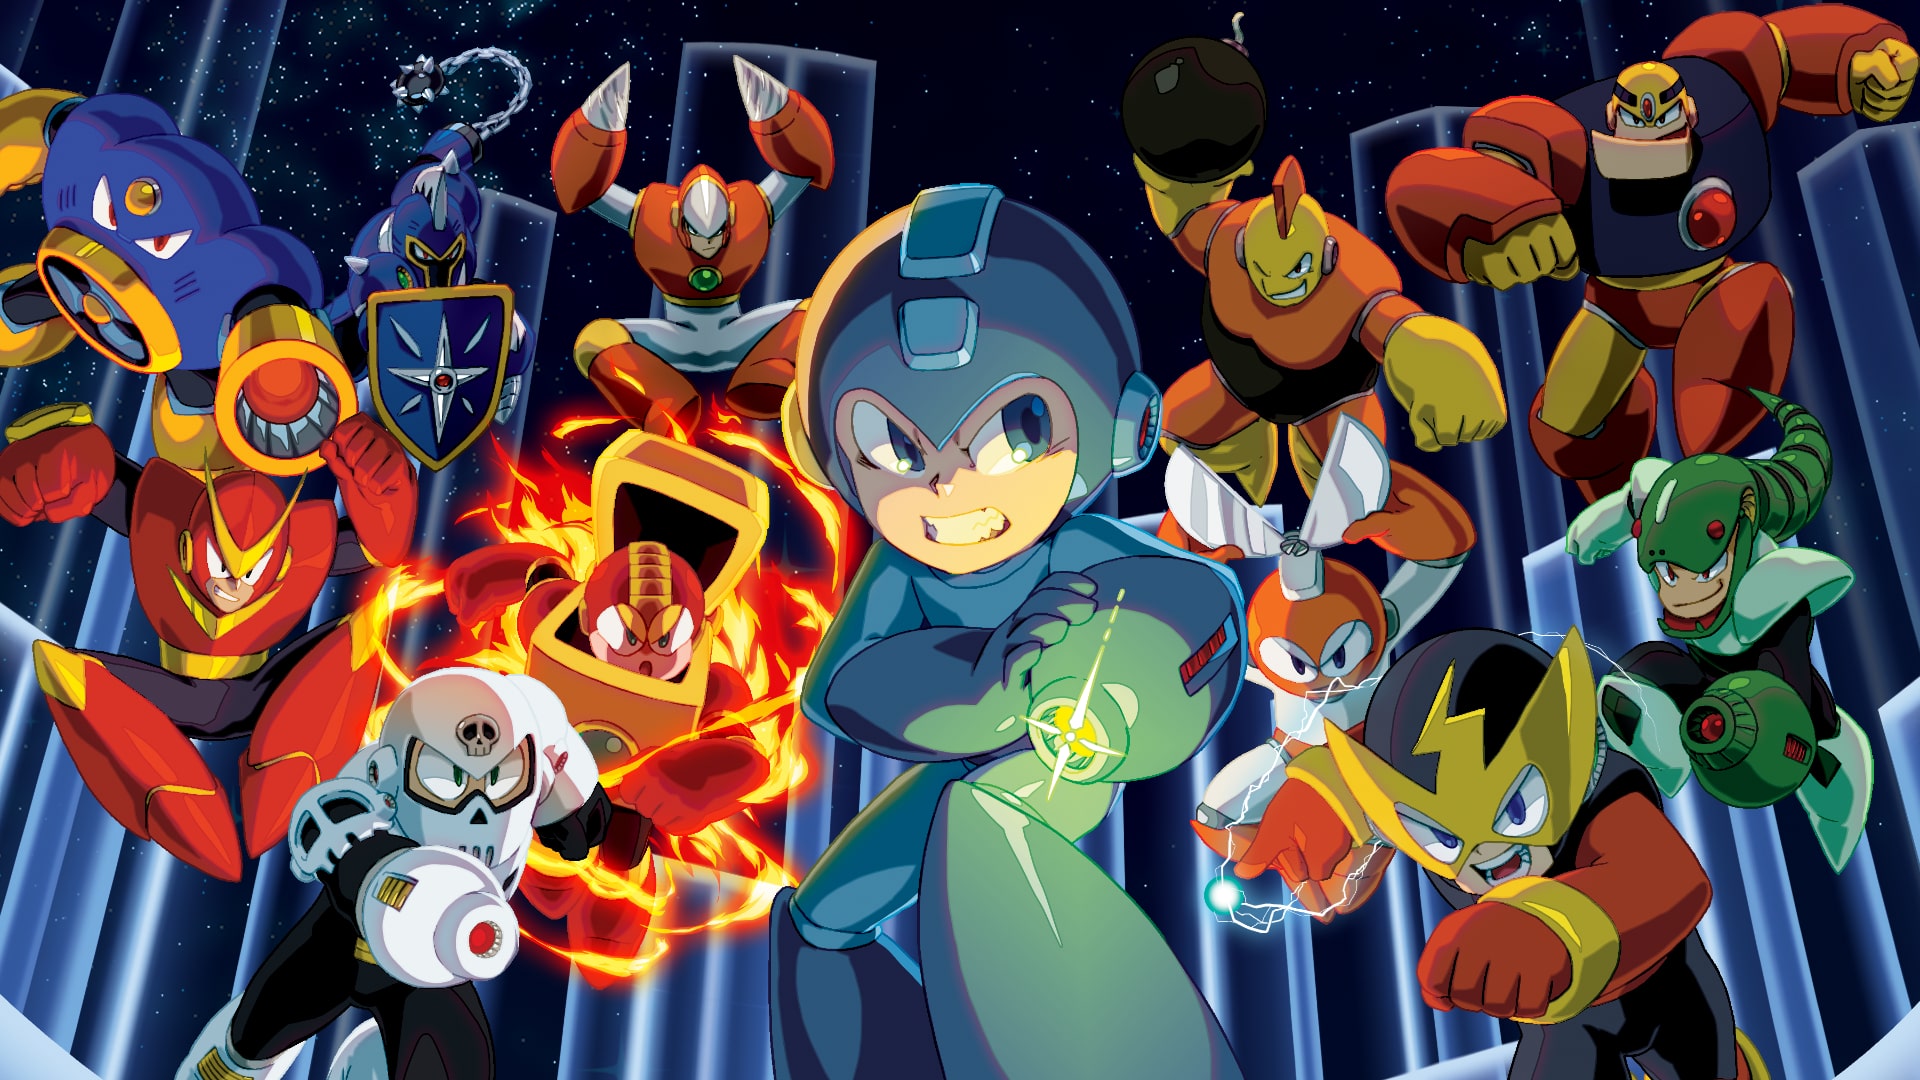 Mega Man® Legacy Collection